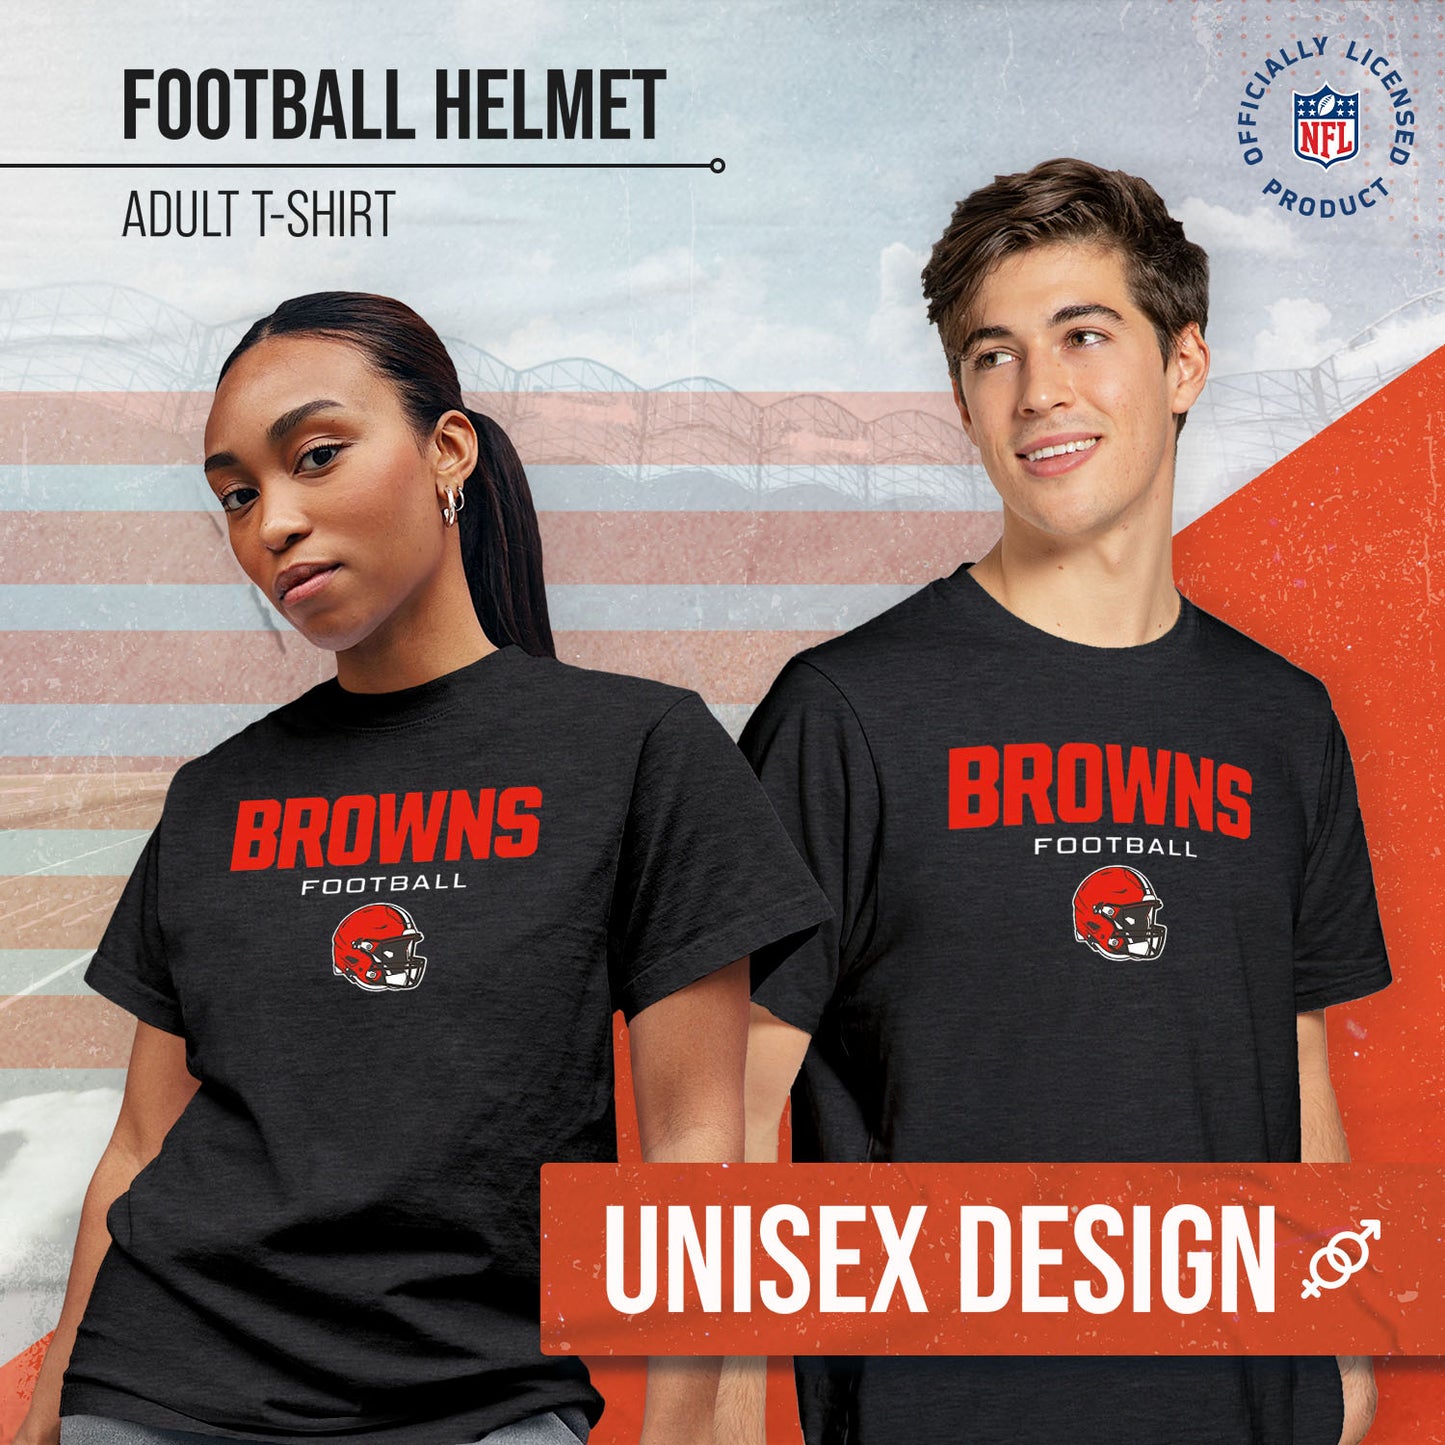 Cleveland Browns NFL Adult Football Helmet Tagless T-Shirt - Charcoal